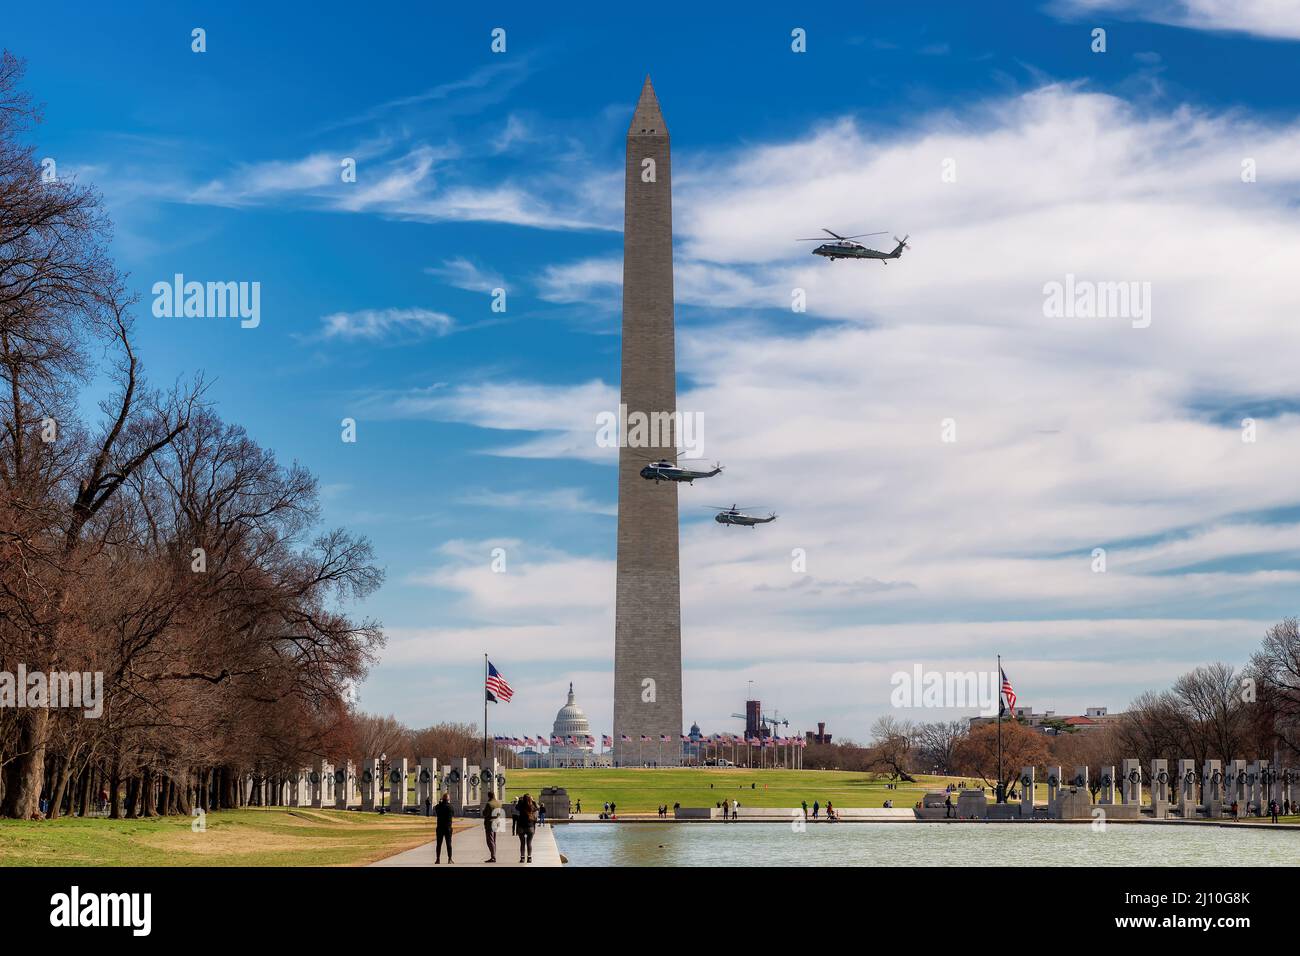 Hubschrauber im Flug am Washington Monument mit US-Präsident, Washington, DC, USA Stockfoto